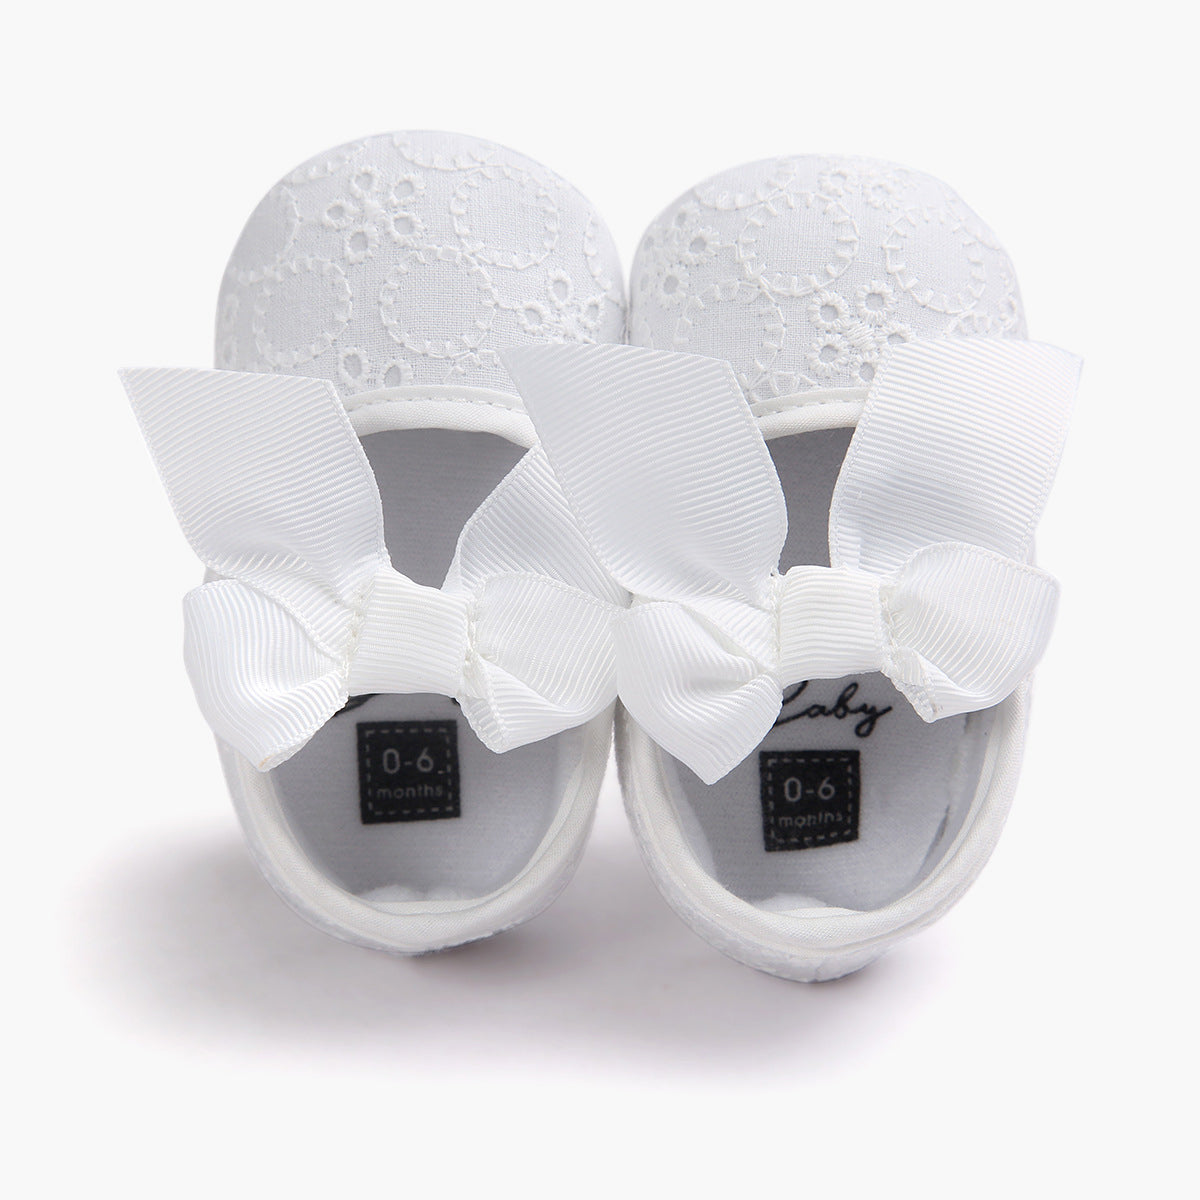 ESTAMICO Baby Girls Princess Bowknot Soft Sole Cloth Crib Shoes Sneaker